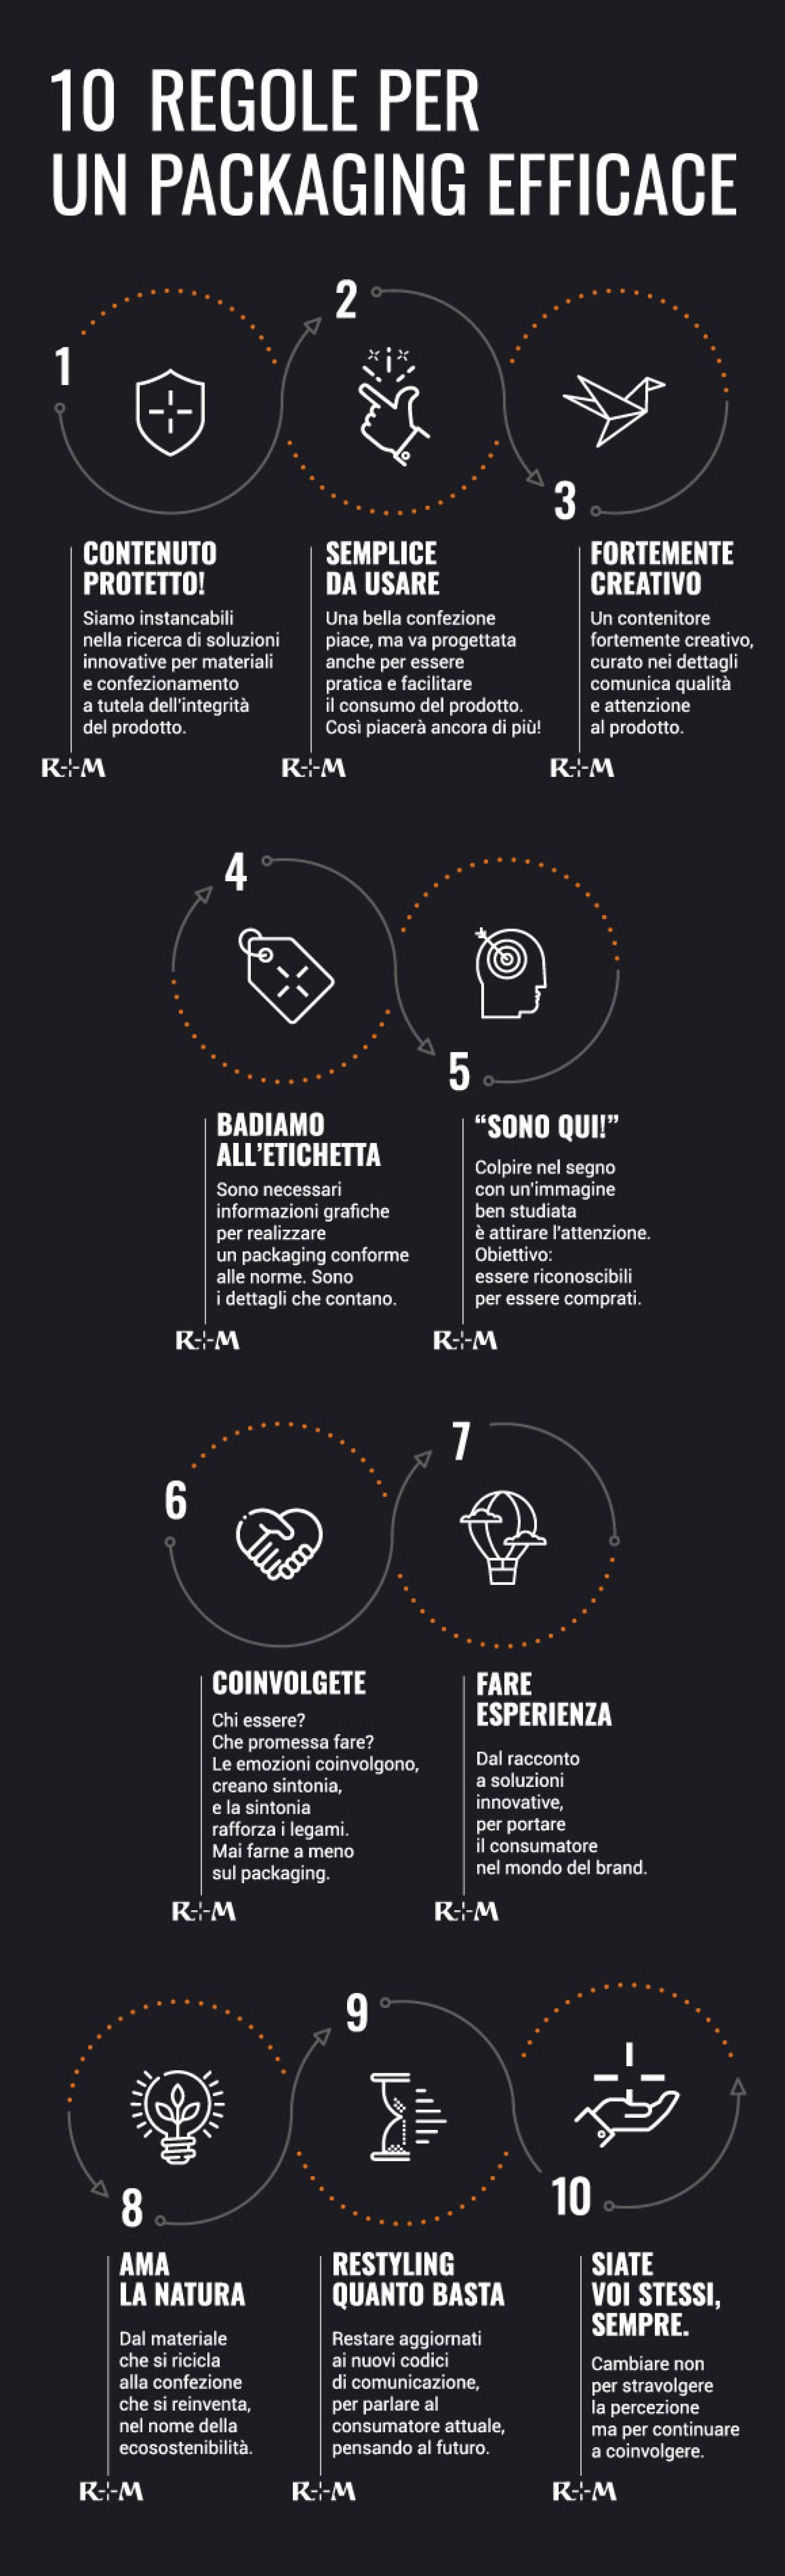 Infografica 10 regole per un pack efficace